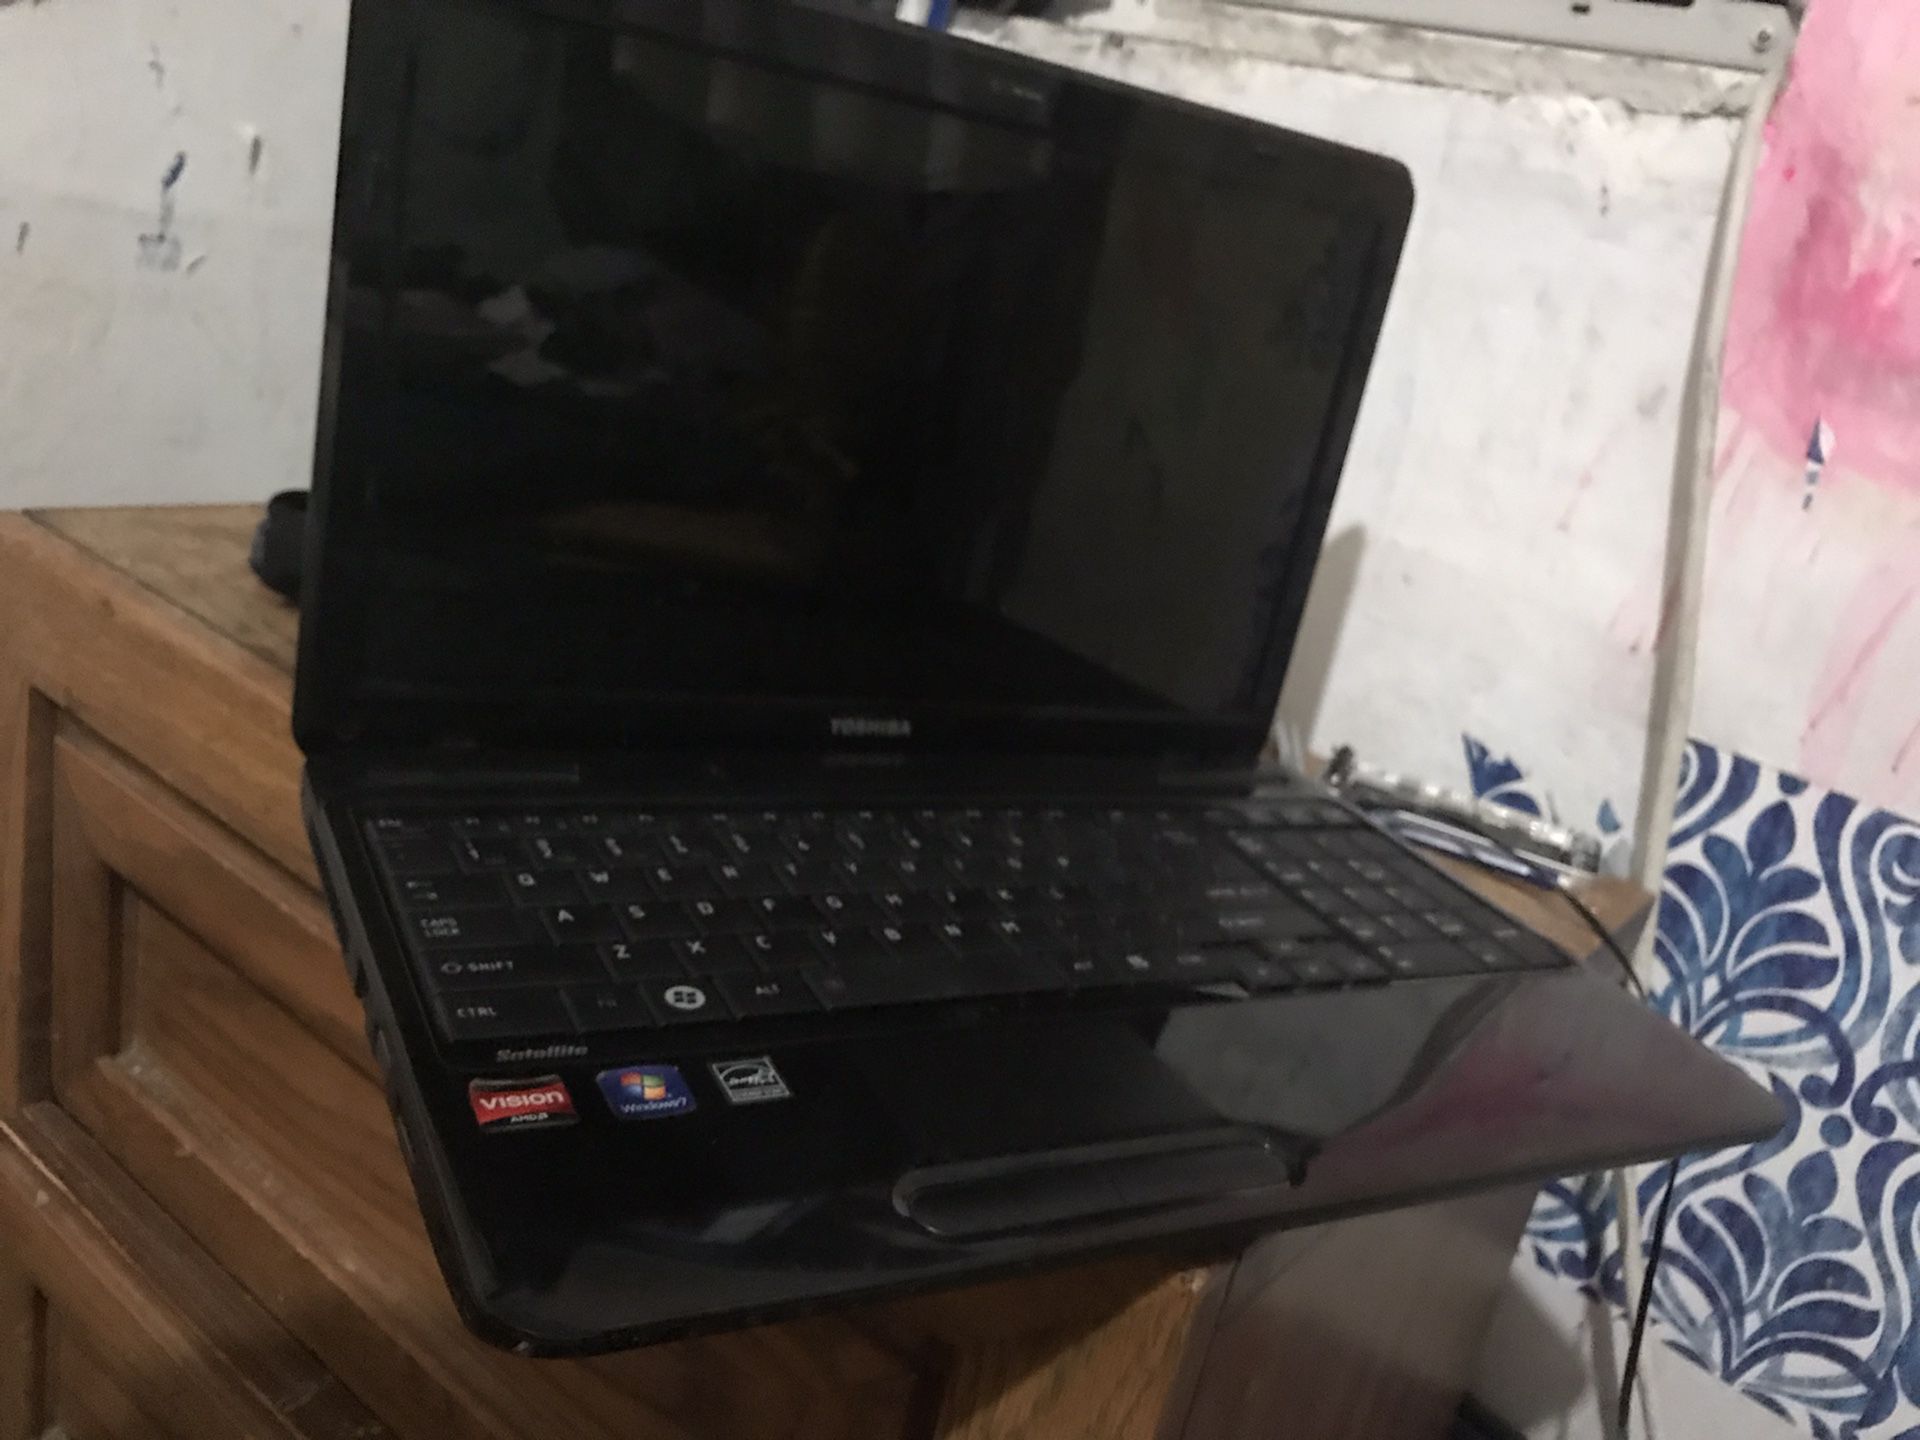 Toshiba Laptop I